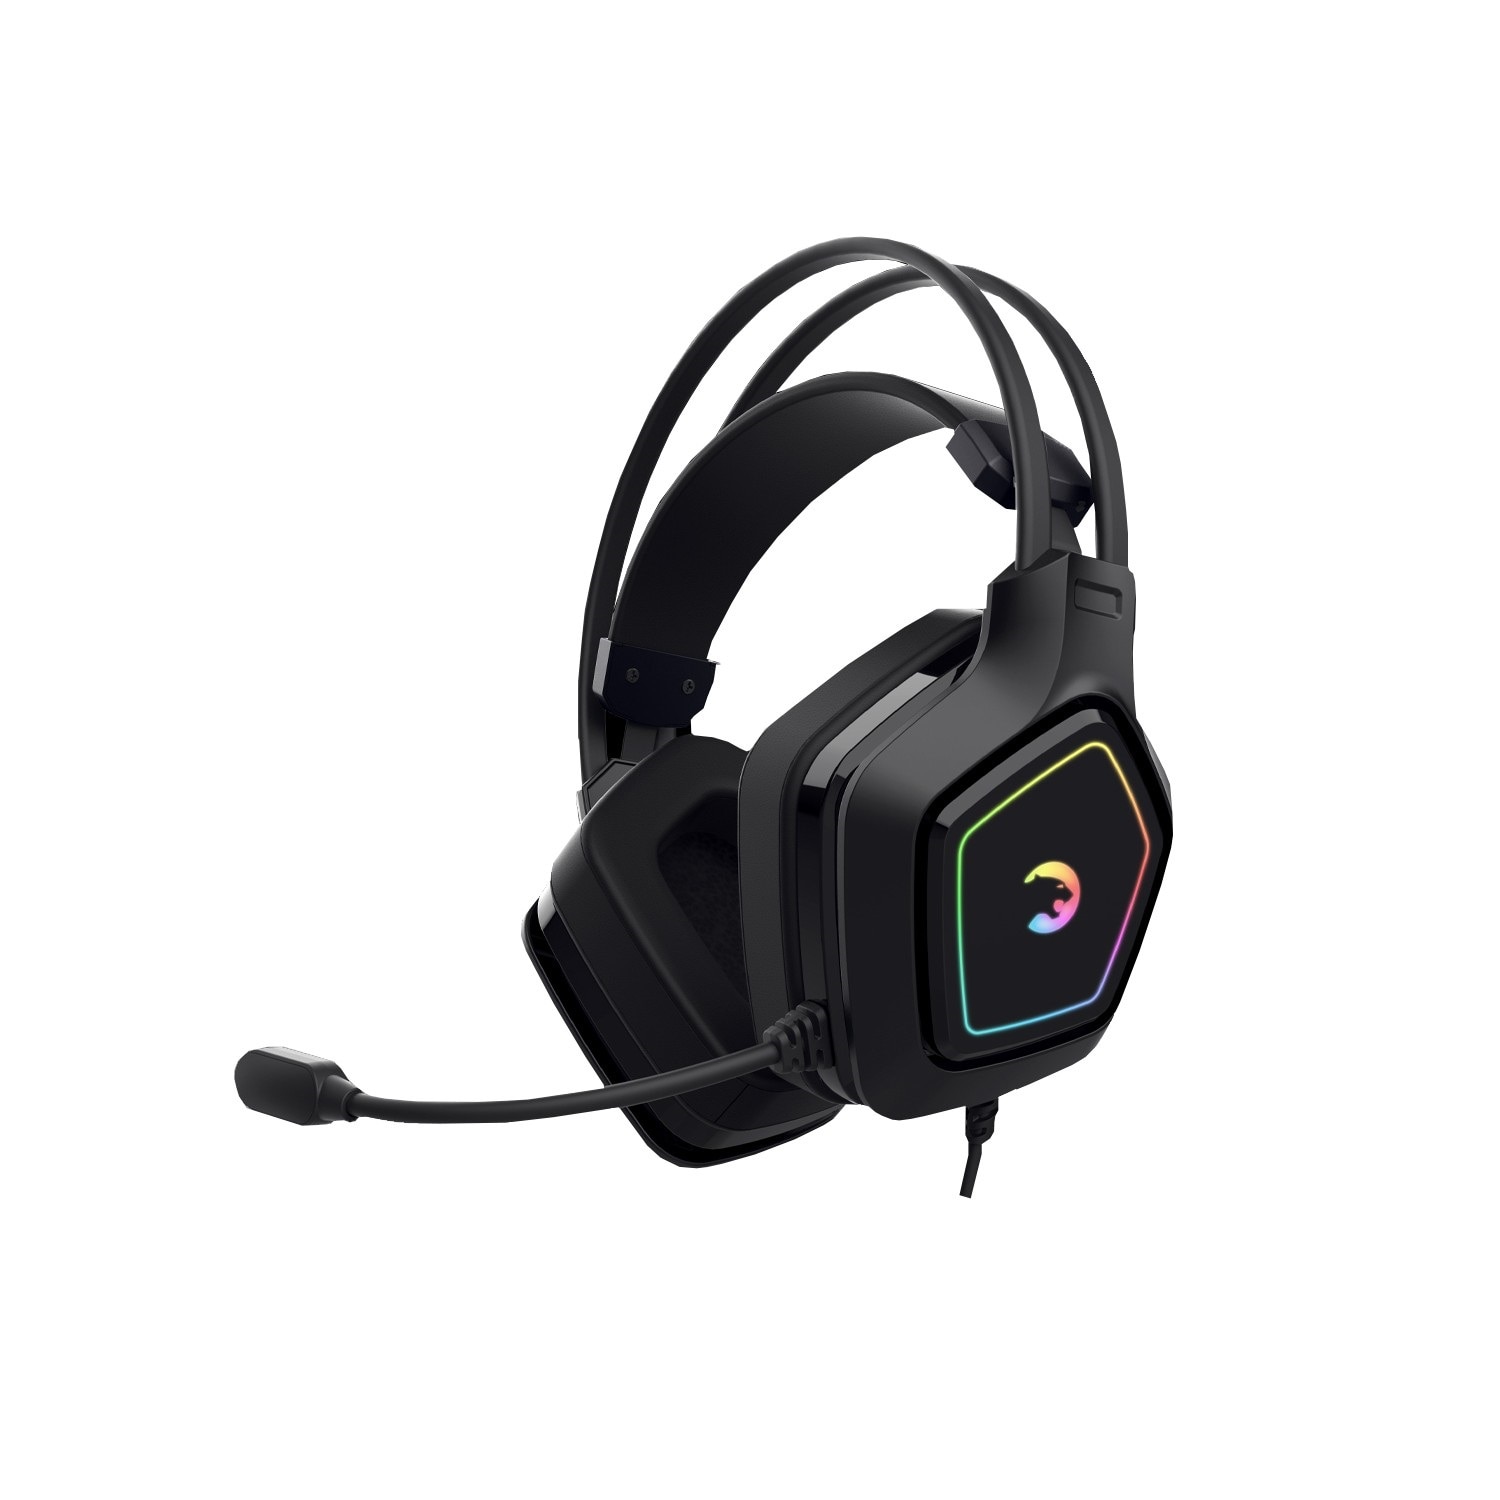 Gamepower Mihawk RGB Işık 7.1 Surround Kulak Üstü Oyuncu Kulaklığı